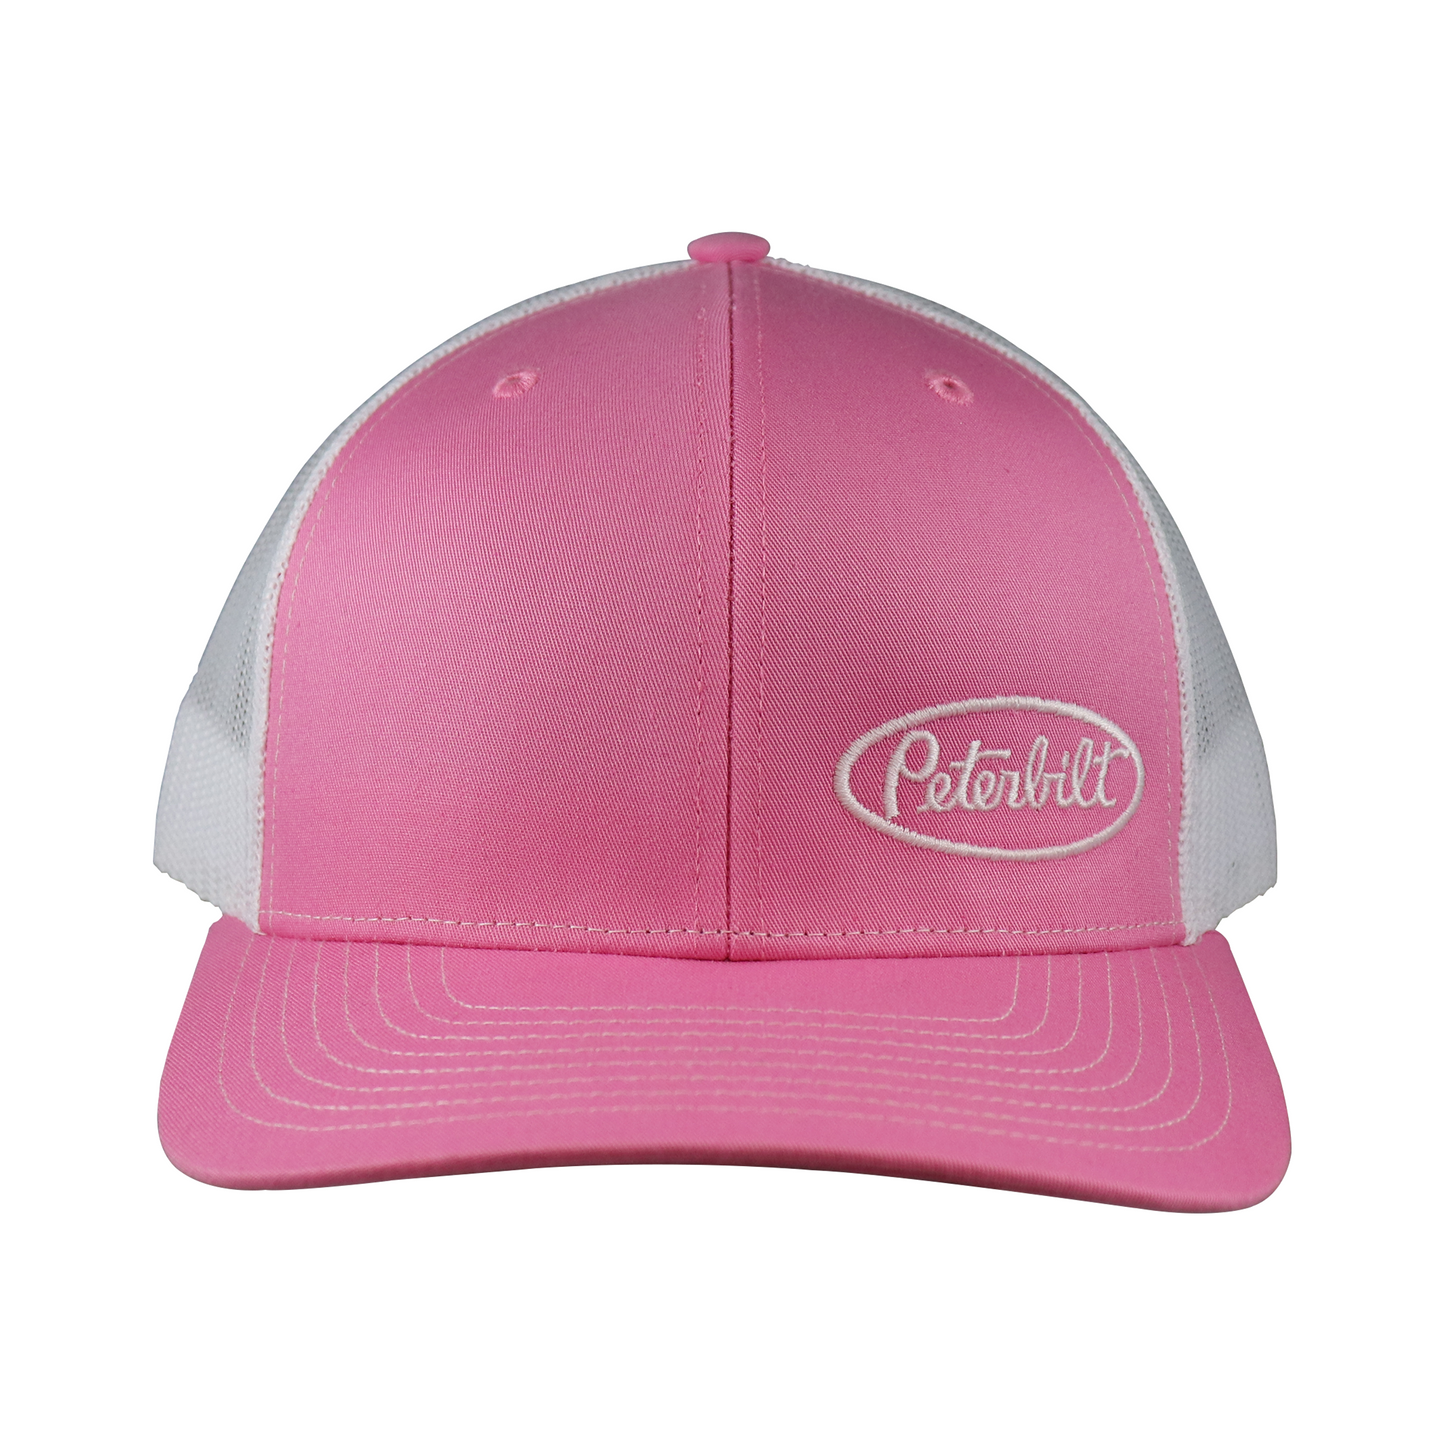 Classic Pink and White Mesh Peterbilt Logo Trucker Cap